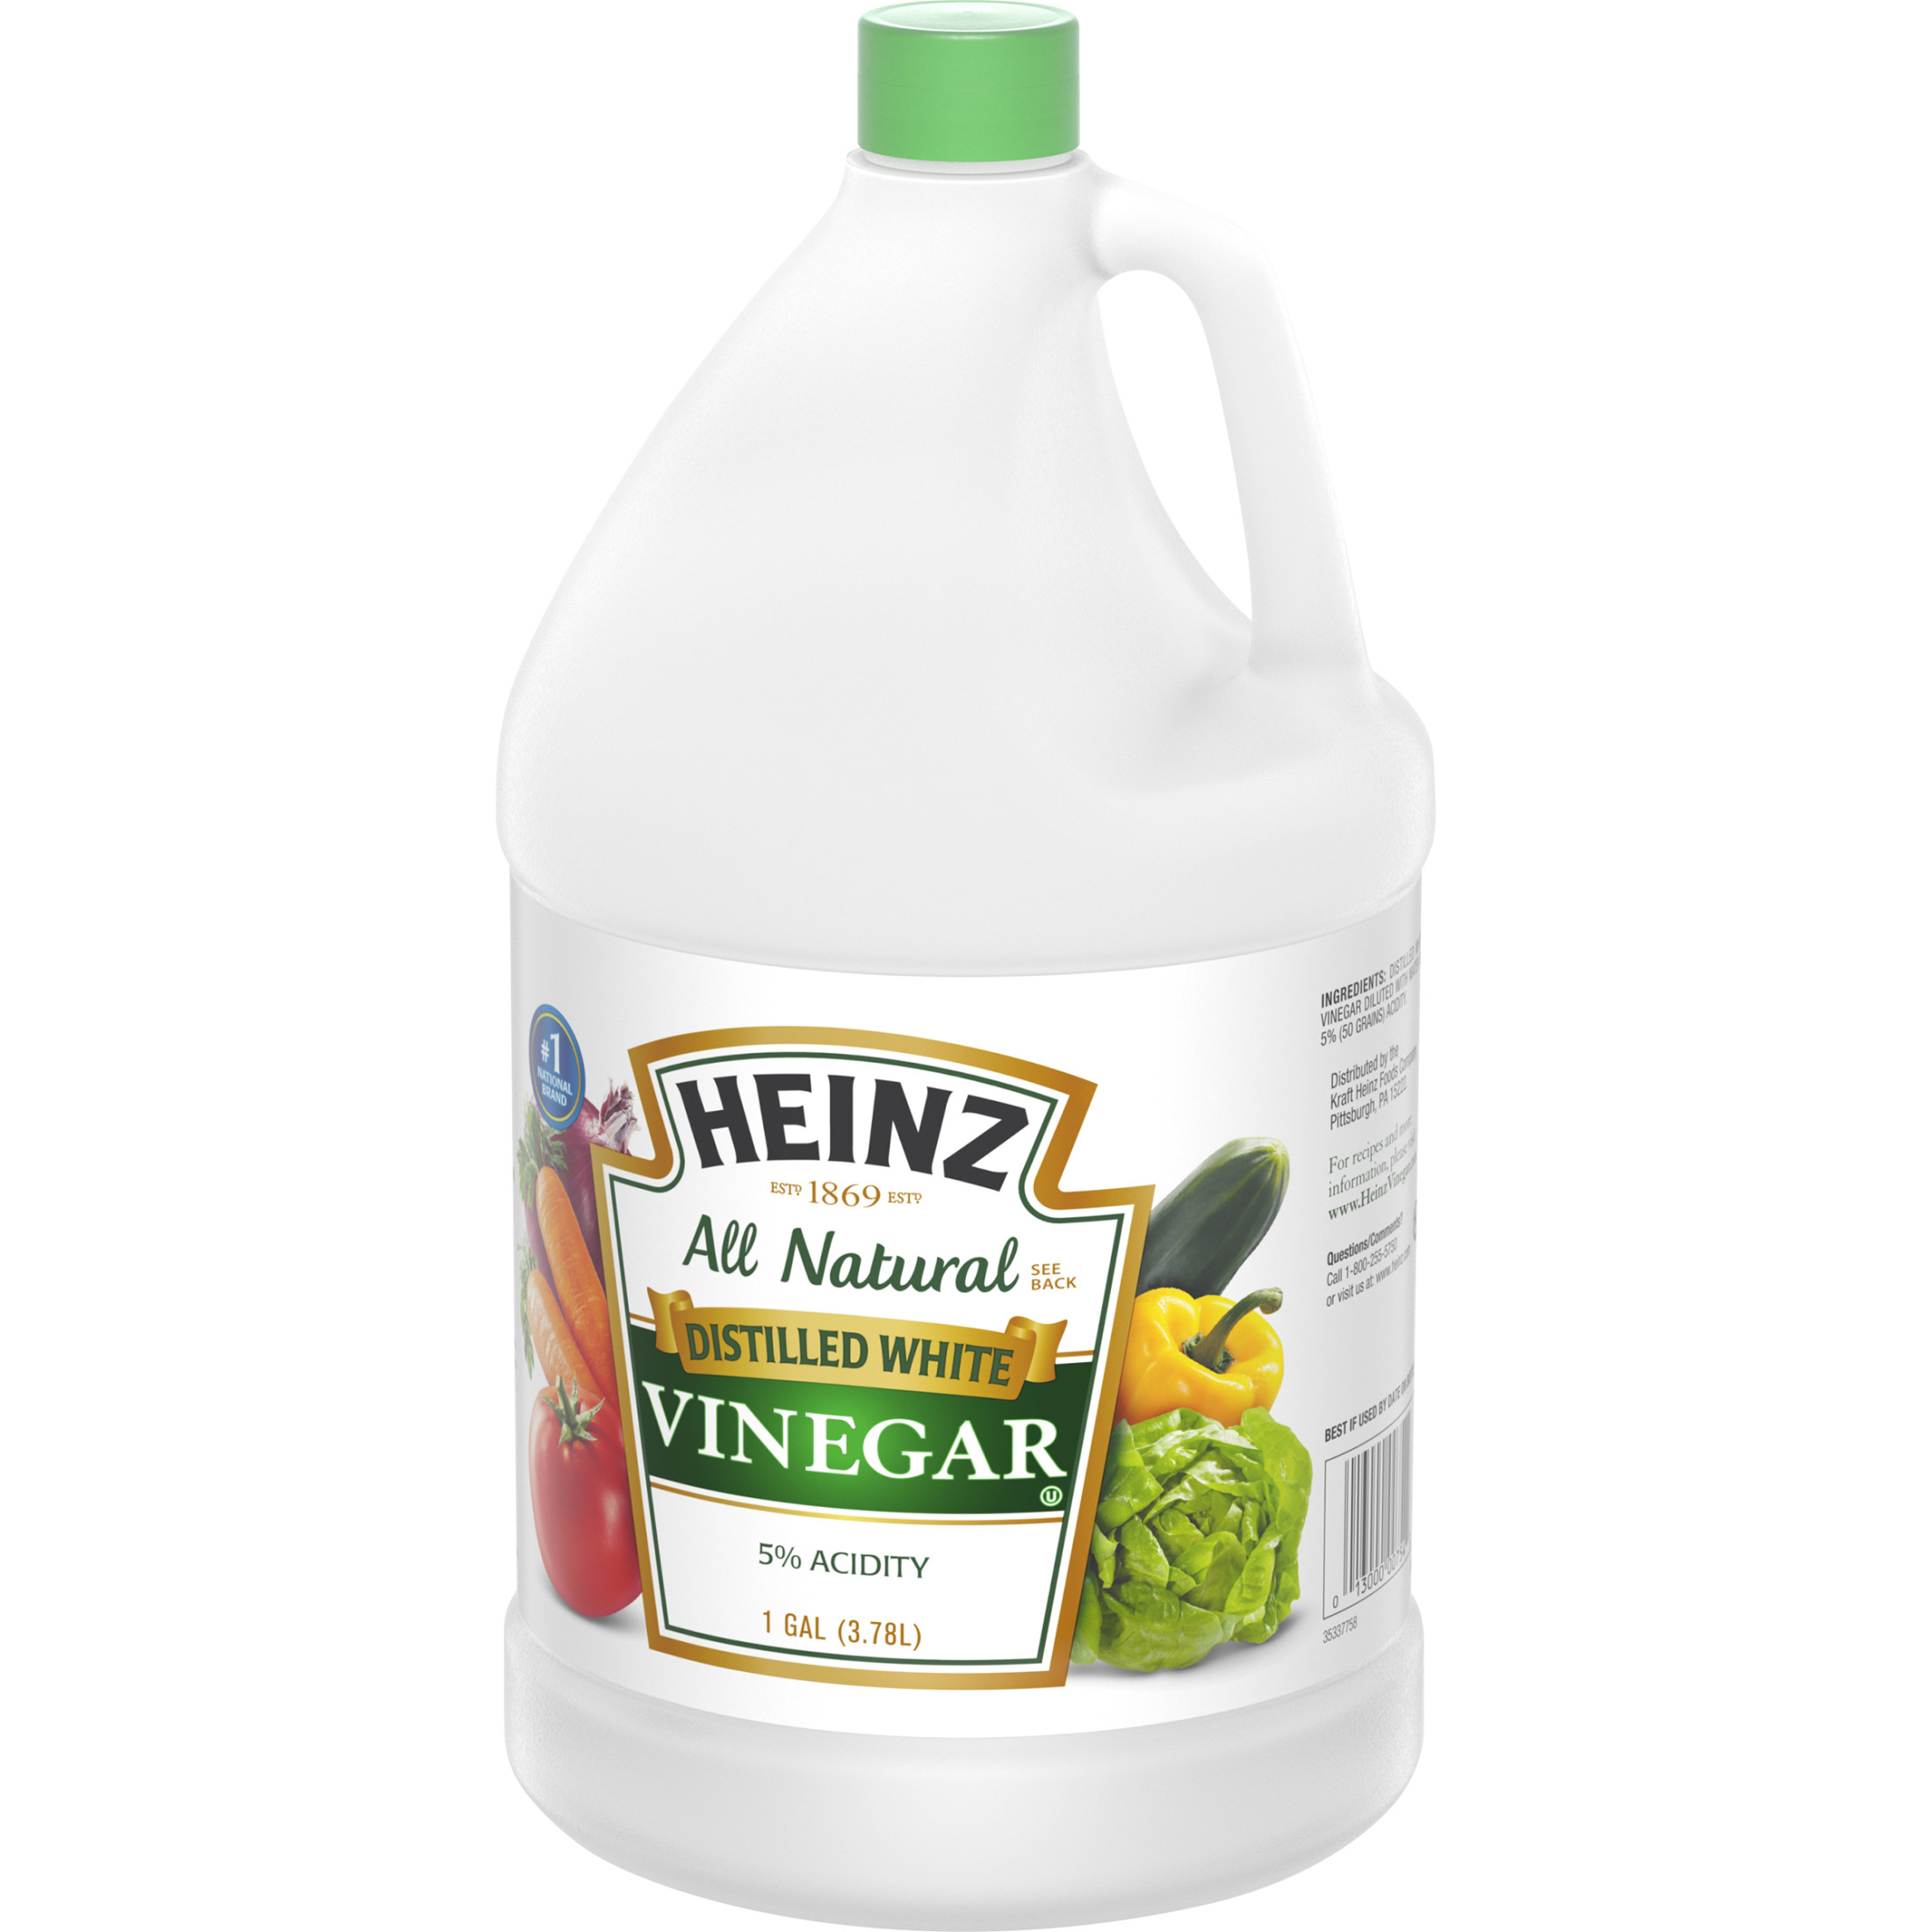 Heinz All Natural Distilled White Vinegar 5% Acidity, 1 gal Jug - image 4 of 6